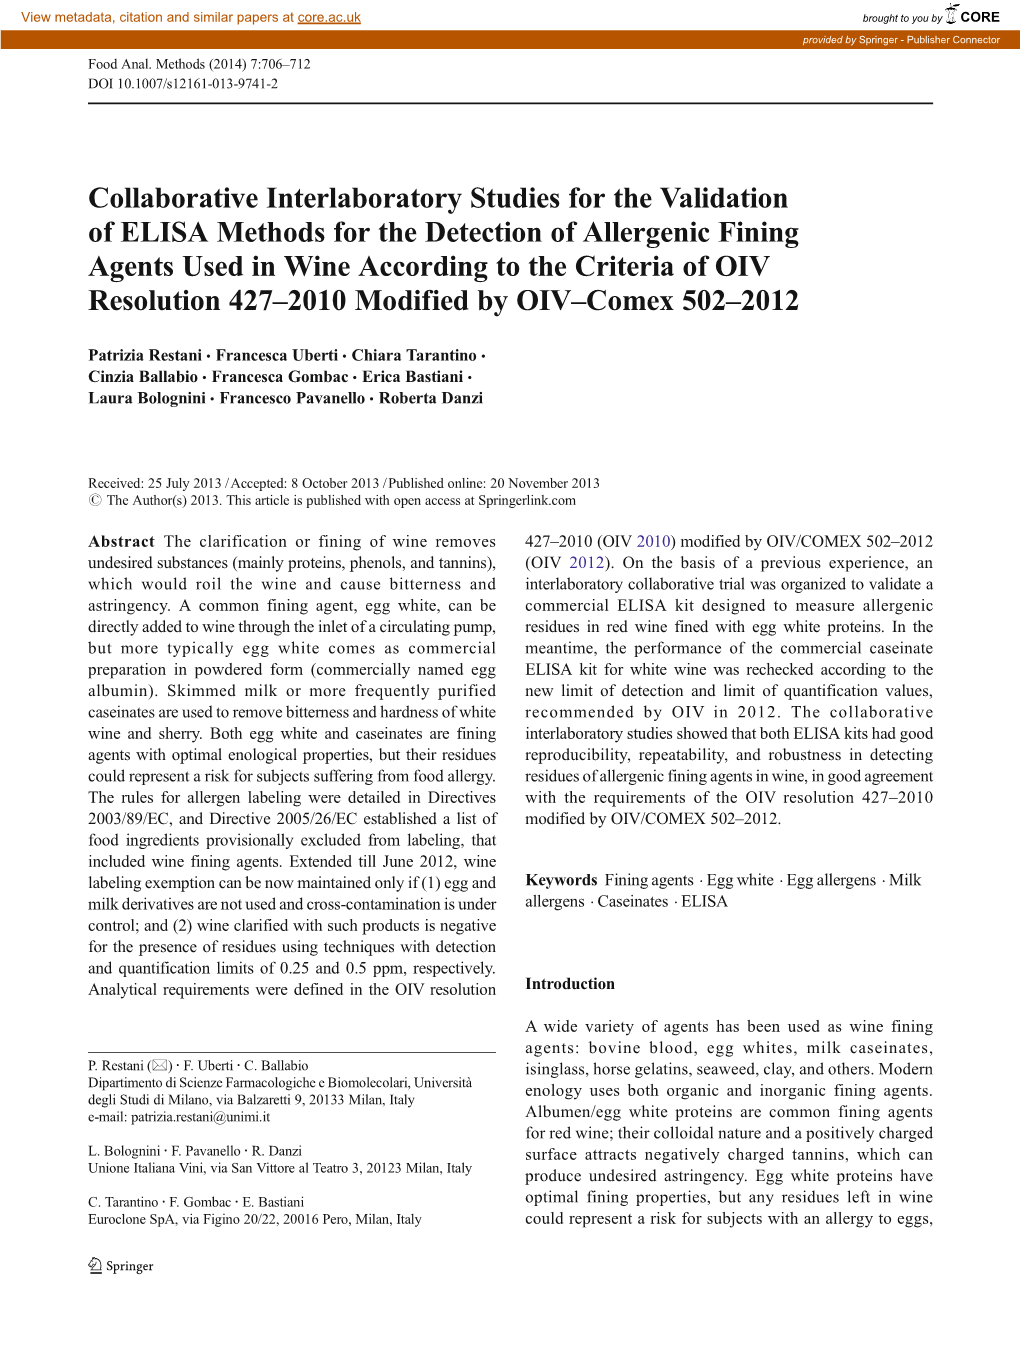 Collaborative Interlaboratory Studies for the Validation of ELISA Methods